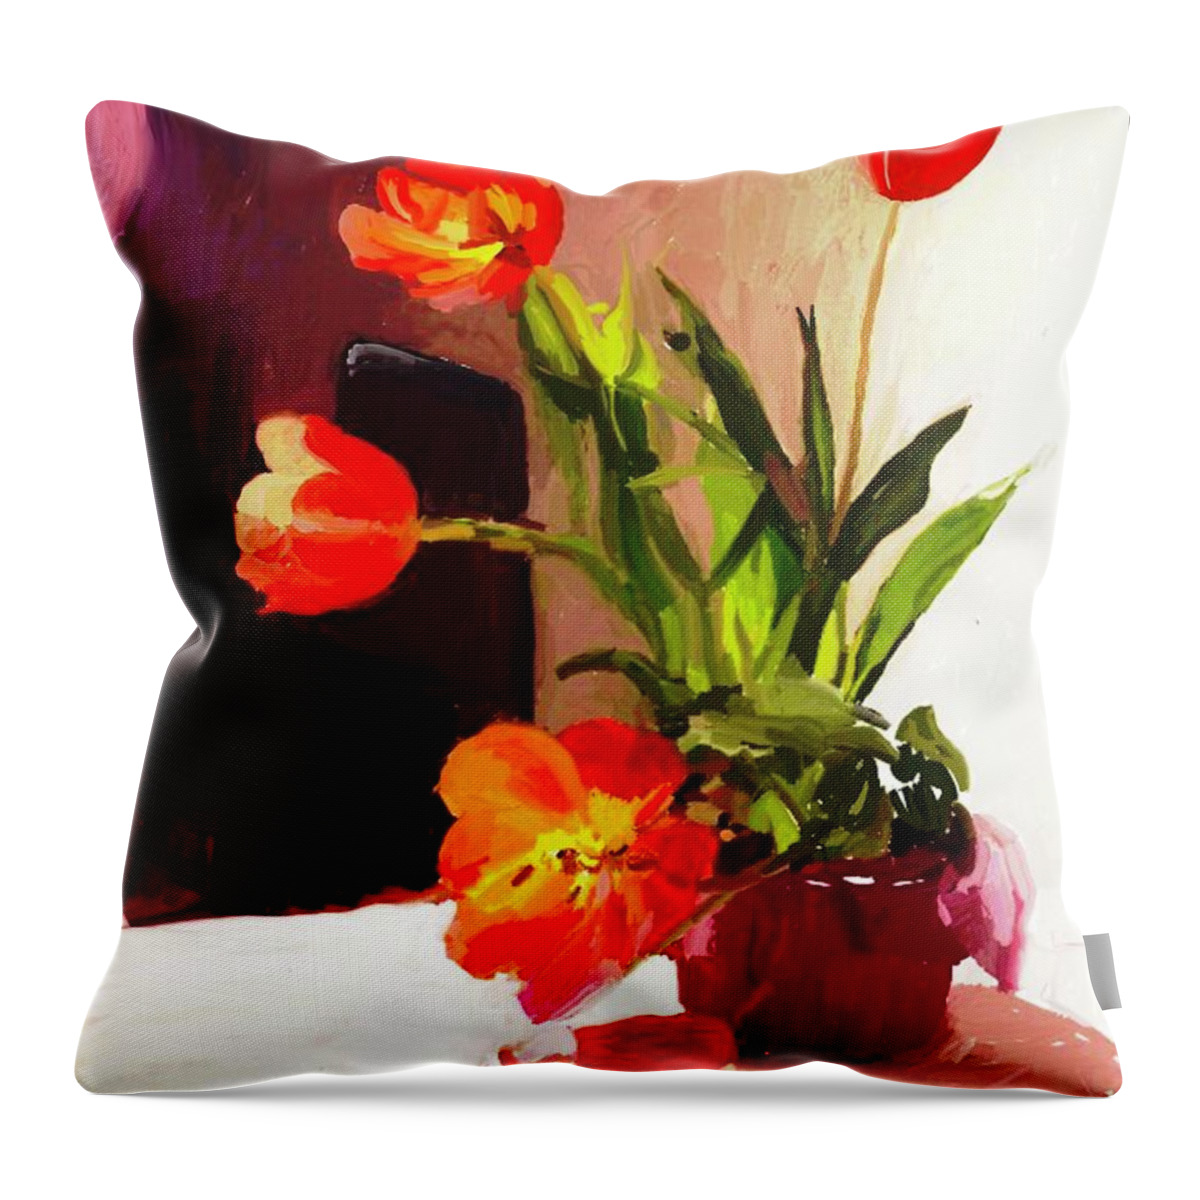 Flowers Throw Pillow featuring the digital art Red Flowers by Joe Roache